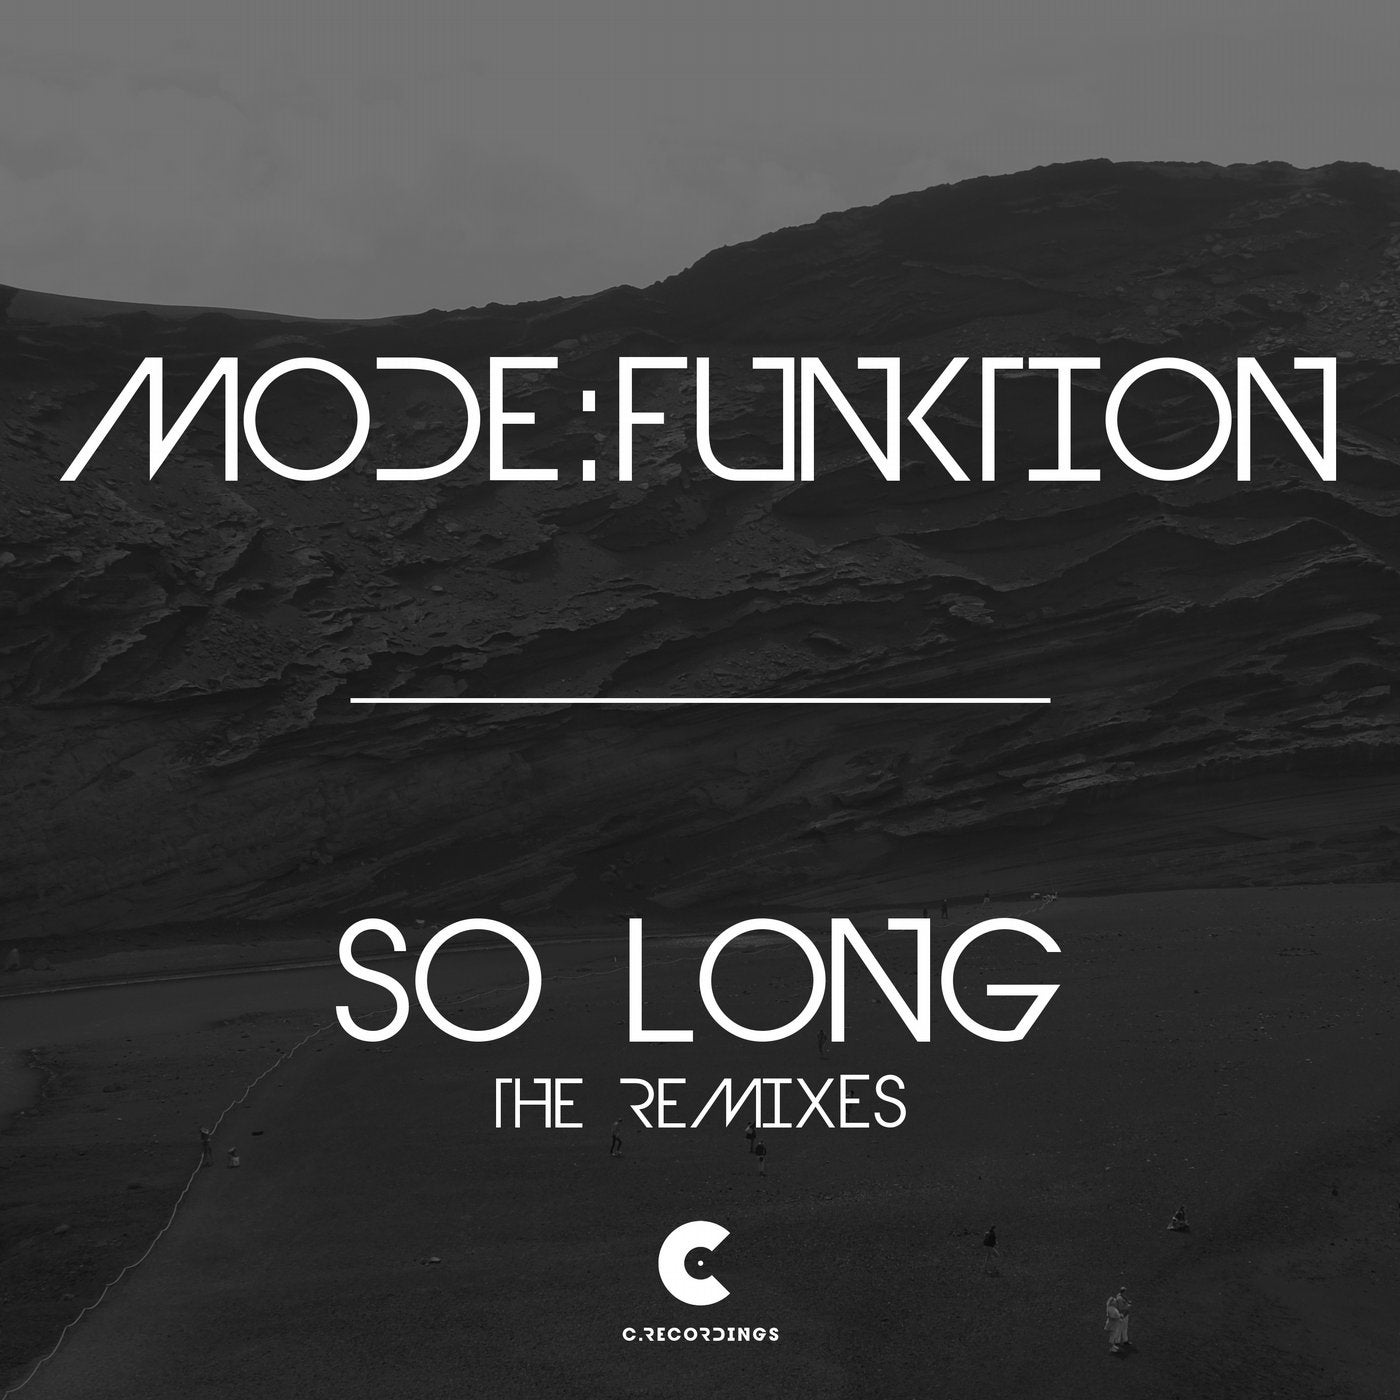 So Long: The Remixes